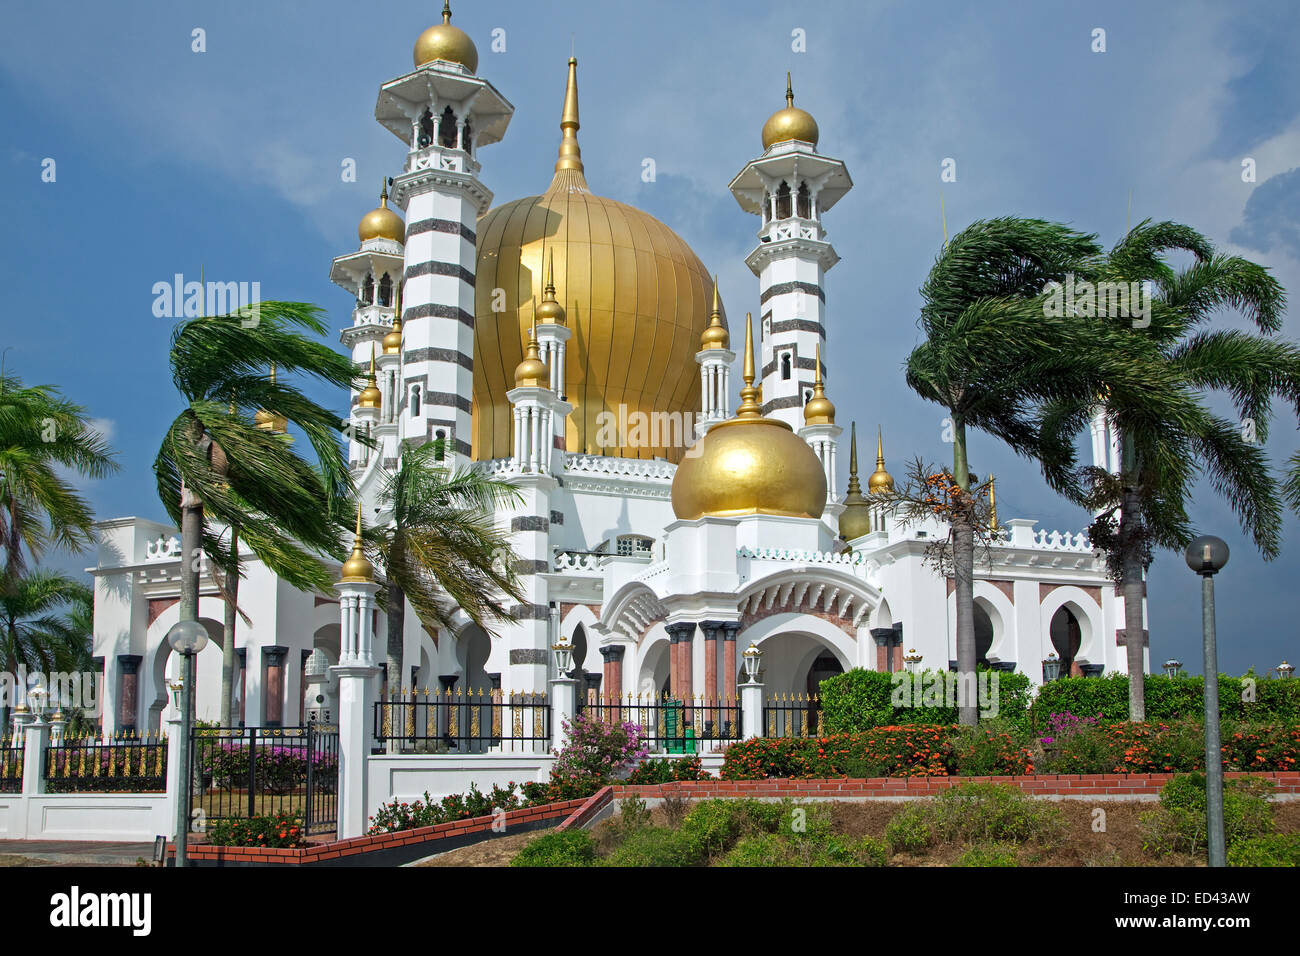 La moschea di Ubudiah / Masjid Ubudiah con cupola dorata a Kuala Kangsar, Perak, Malaysia Foto Stock